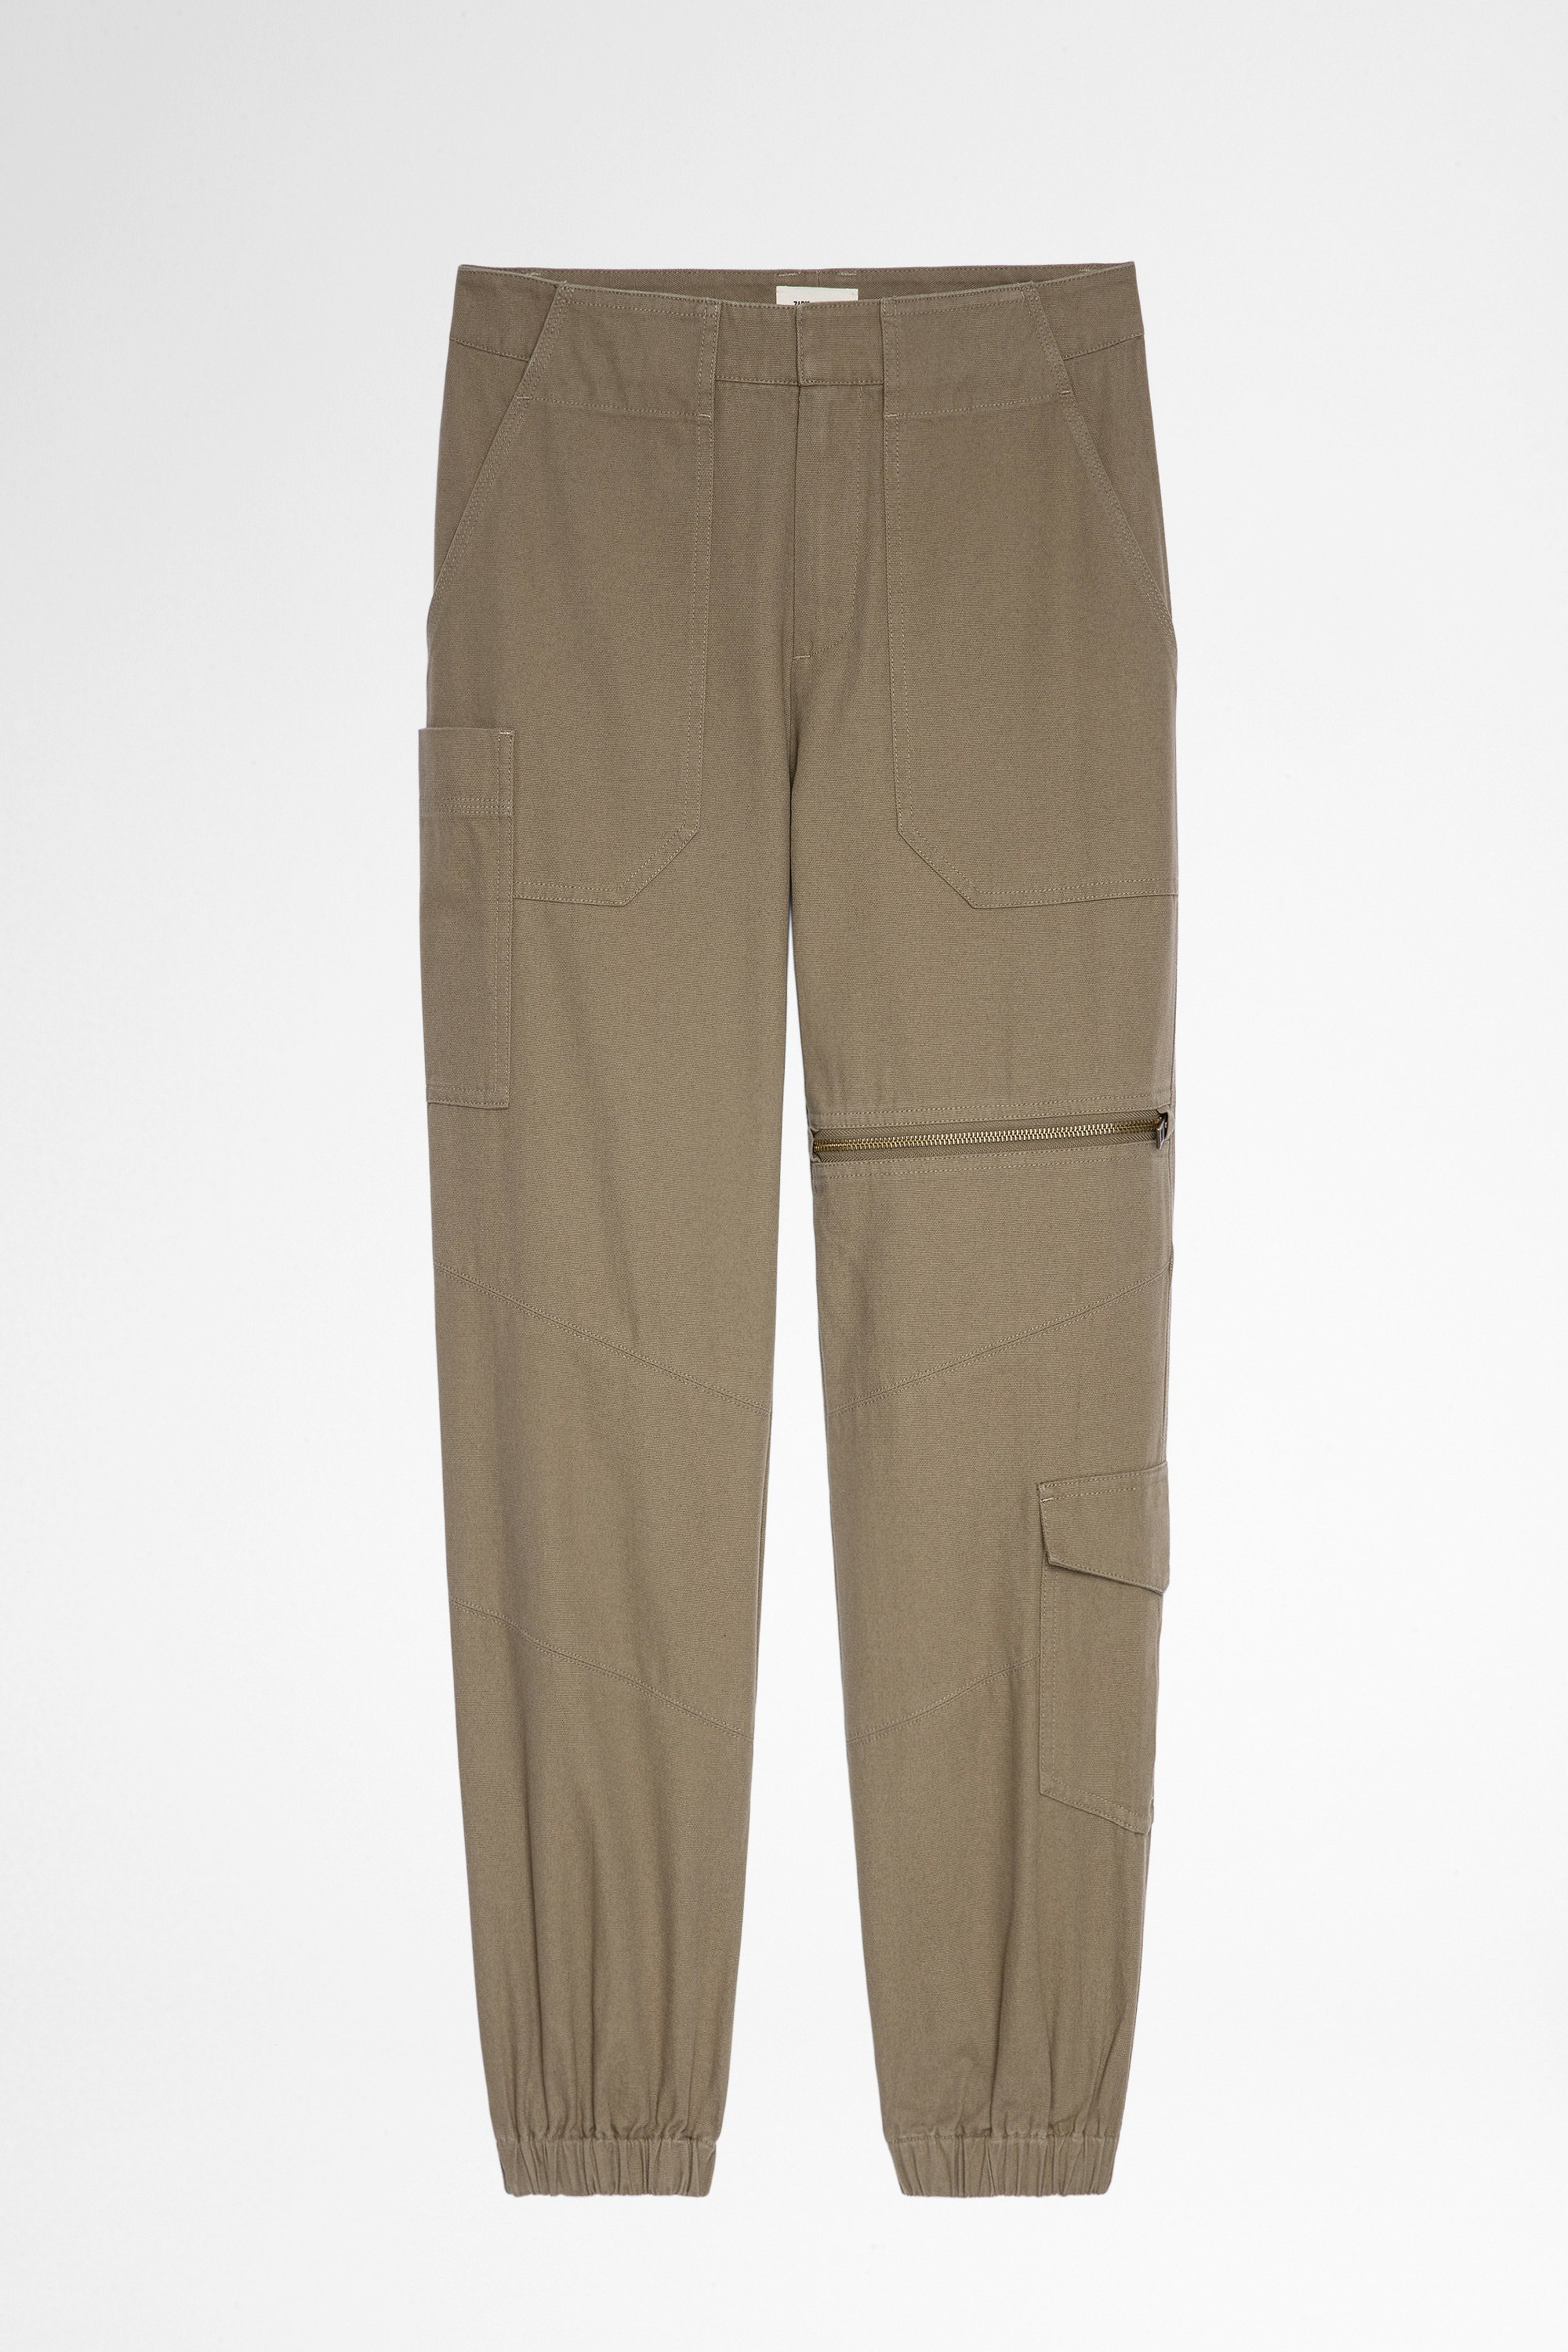 Poder Pants Women's khaki military pants. Made with fibers from organic farming.